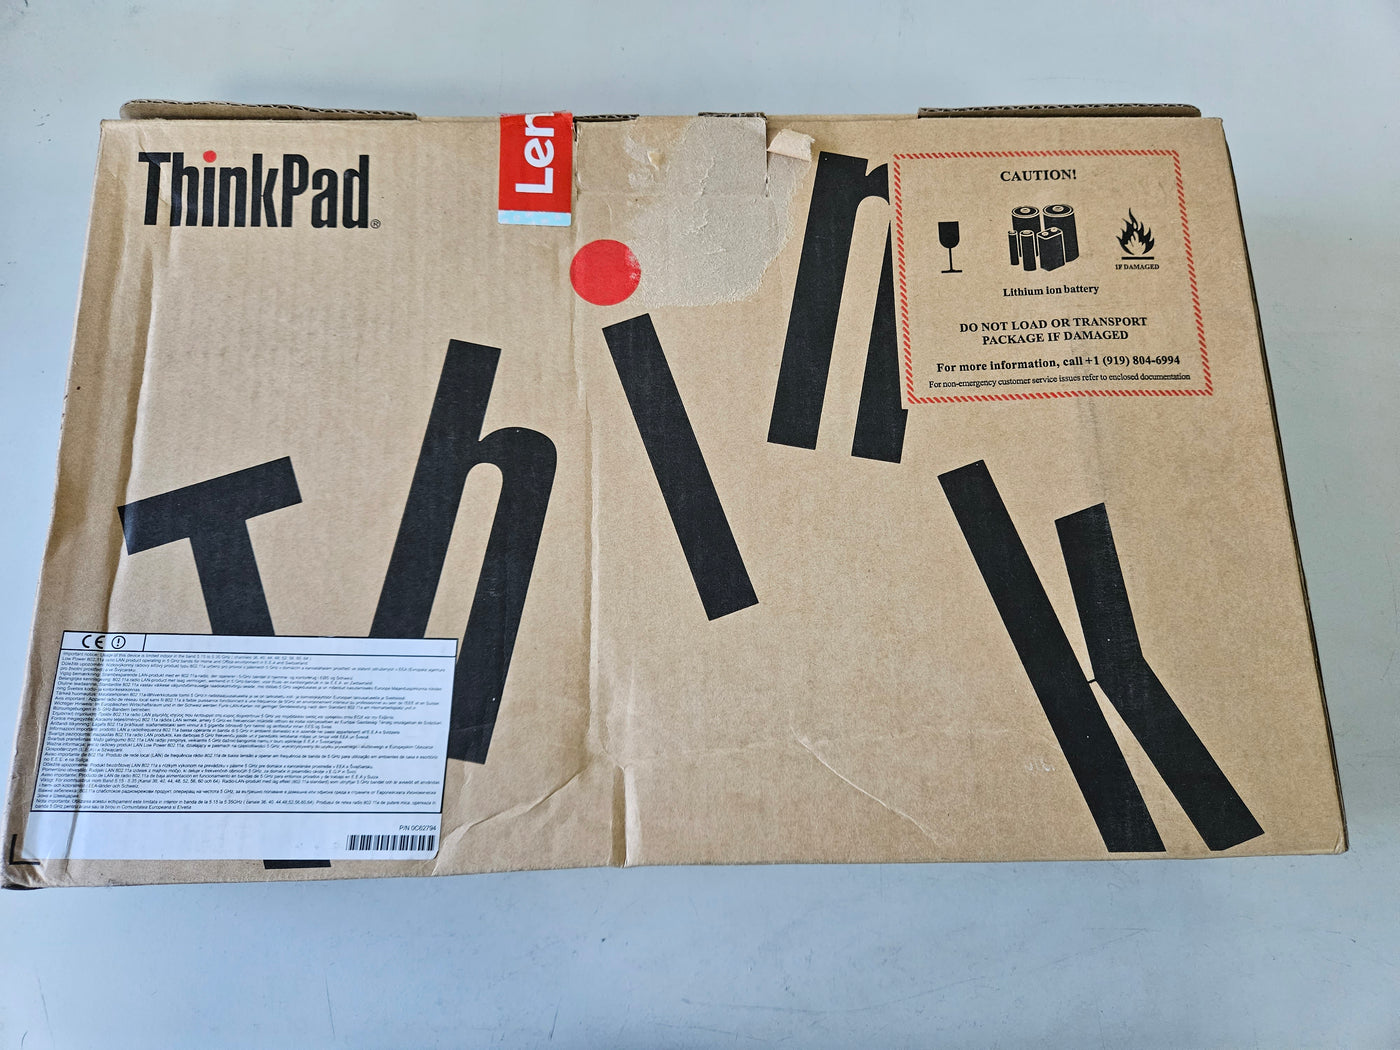 Lenovo ThinkPad T460 256GB SSD 8GB RAM i5-6200U 2.3GHz UK Keys Laptop ( 20FN-003LUK ) USED Grade A